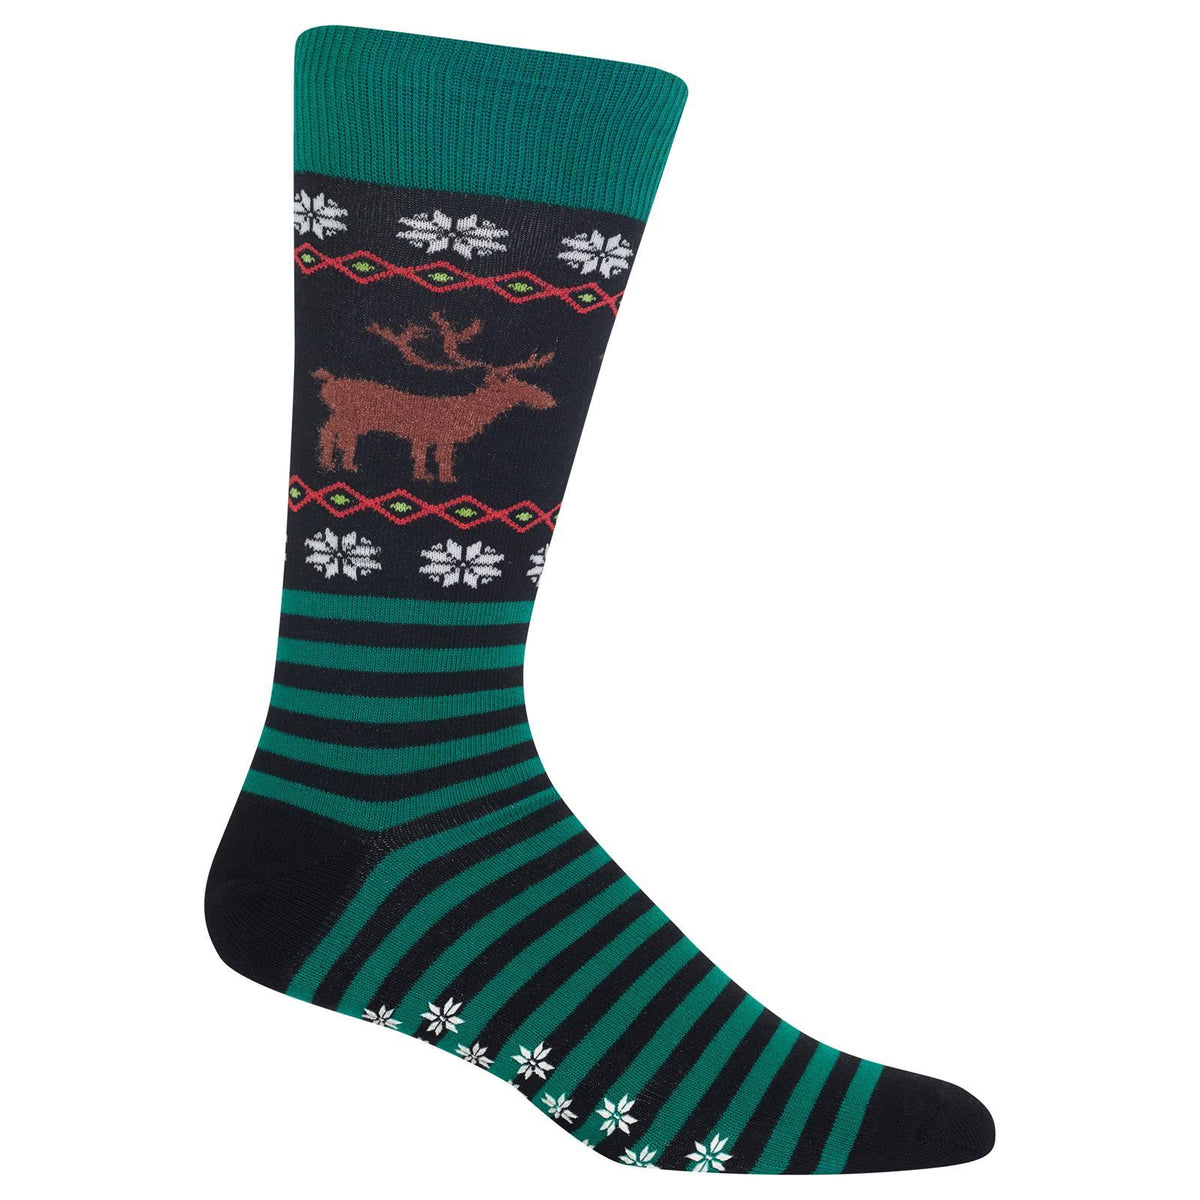 Reindeer Socks - Slip-Resistant Men’s Crew Sock Black